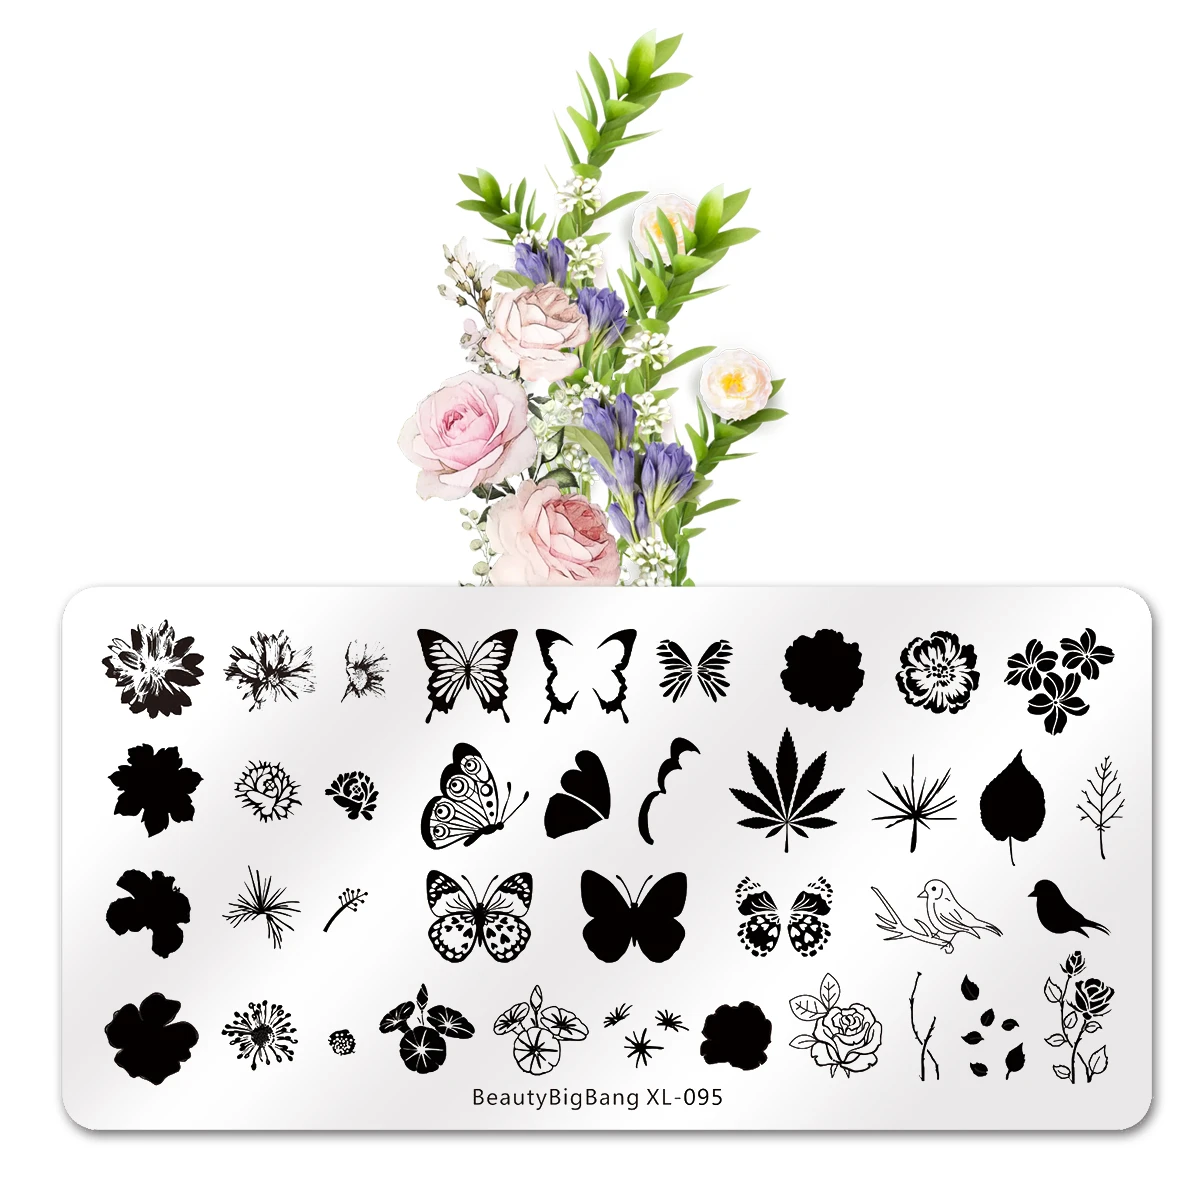 BeautyBigBang Stamping Plates Nail Flower Butterfly Bird Nature Theme Image Stainless Steel Stencil Art Template | Красота и здоровье